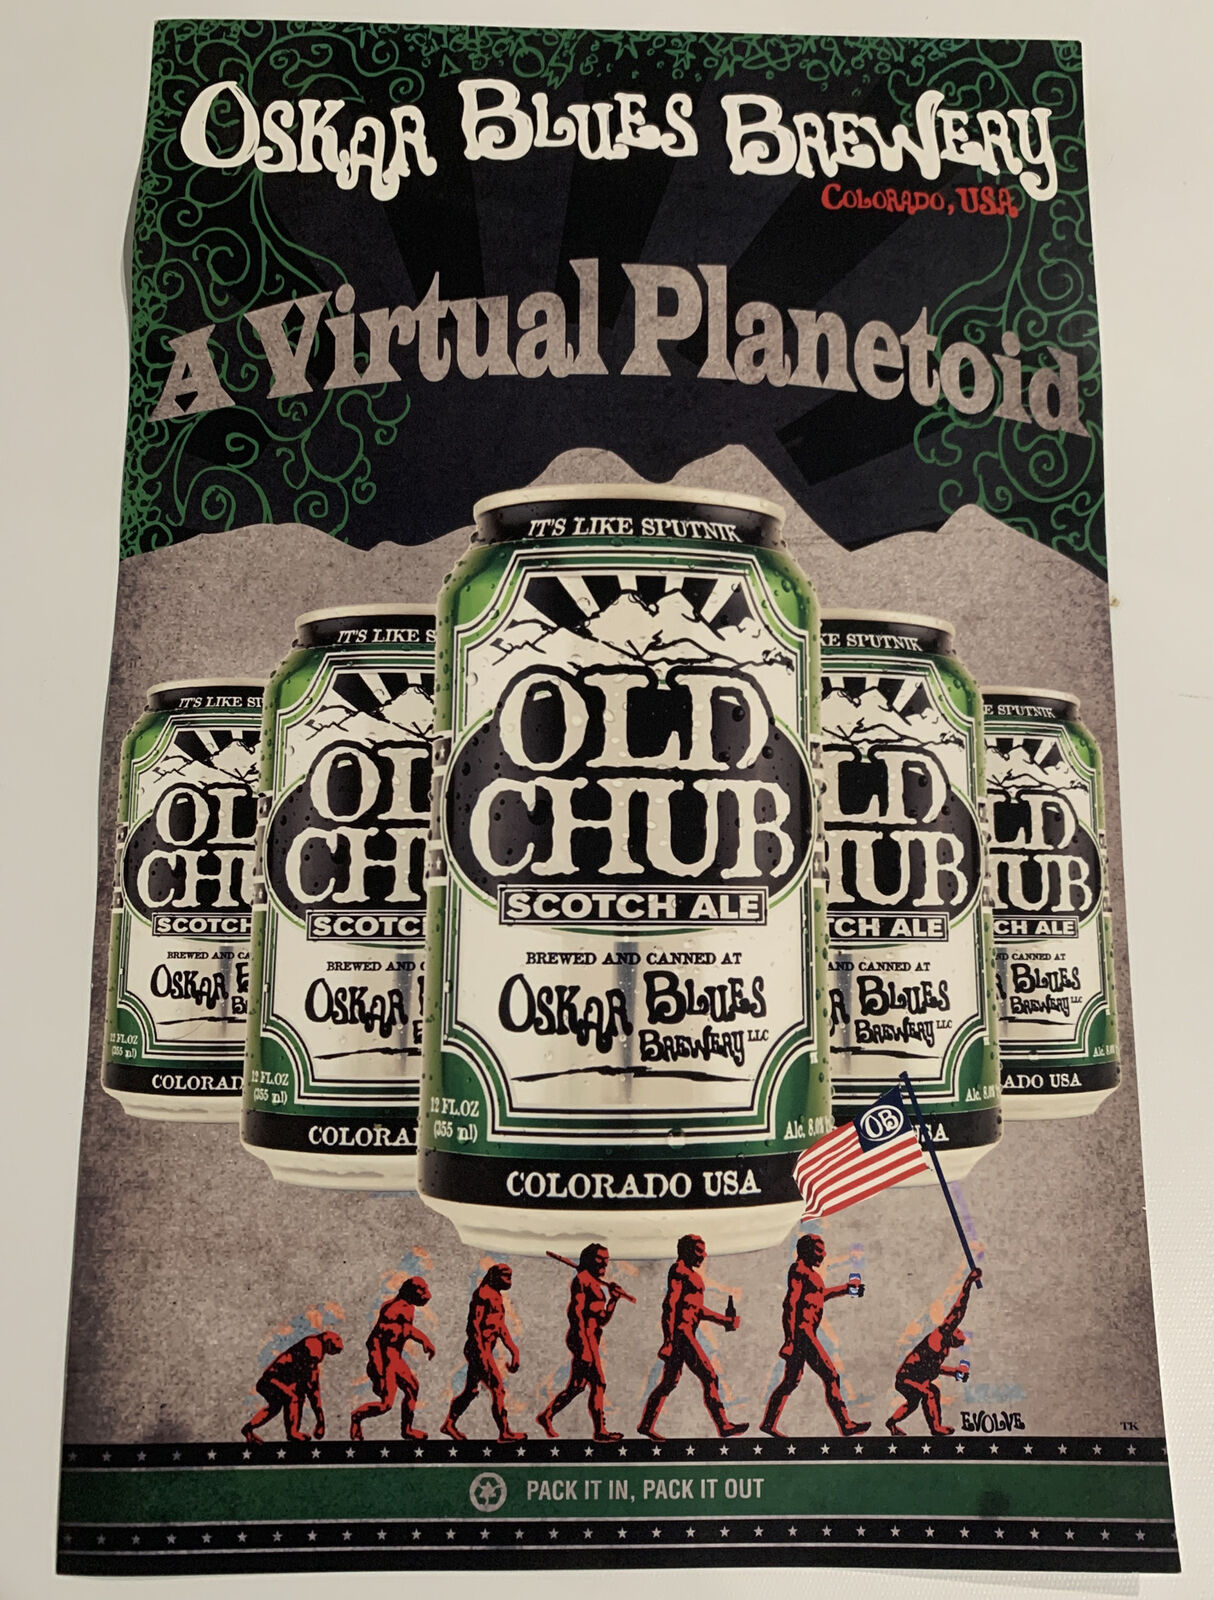 Oskar Blues Brewery Poster A Virtual Planetoid Old Chub Scotch Ale Colorado RARE